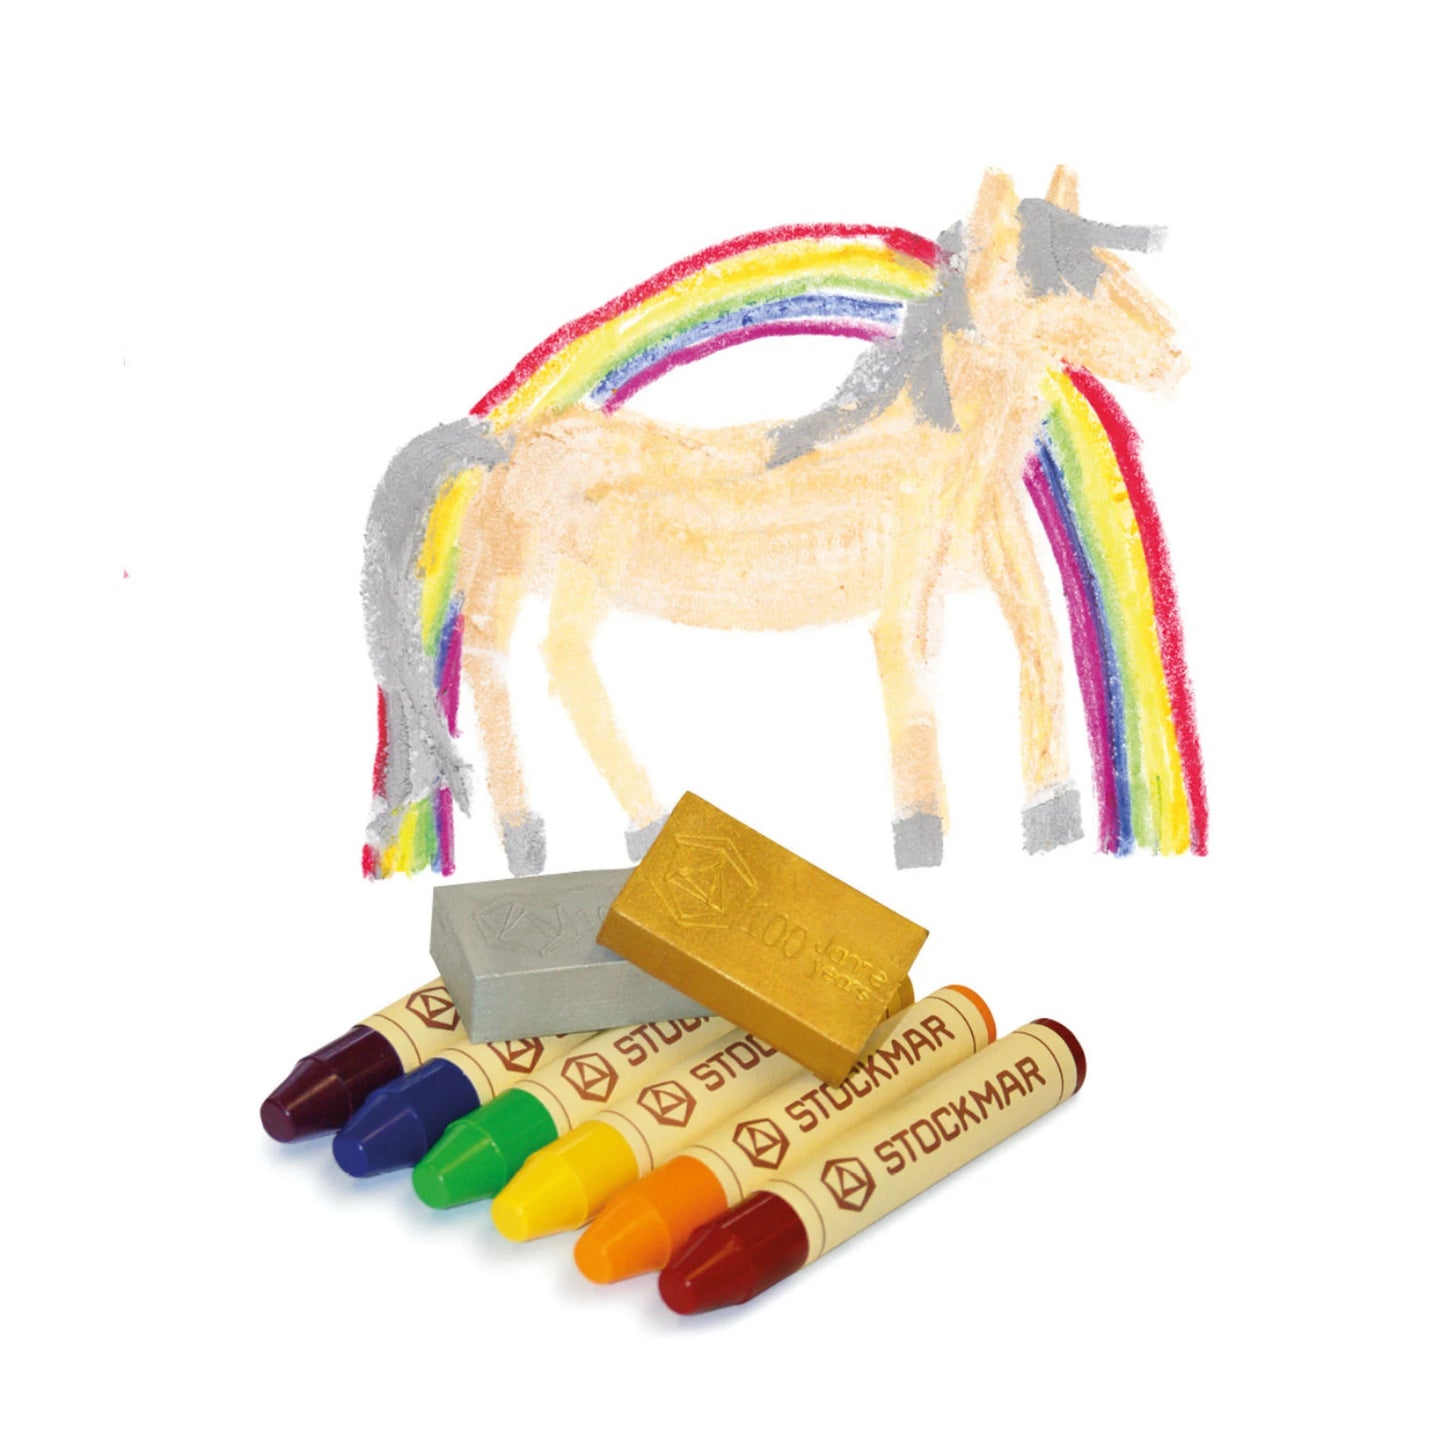 Stockmar Rainbow Crayons, Limited Edition - Alder & Alouette